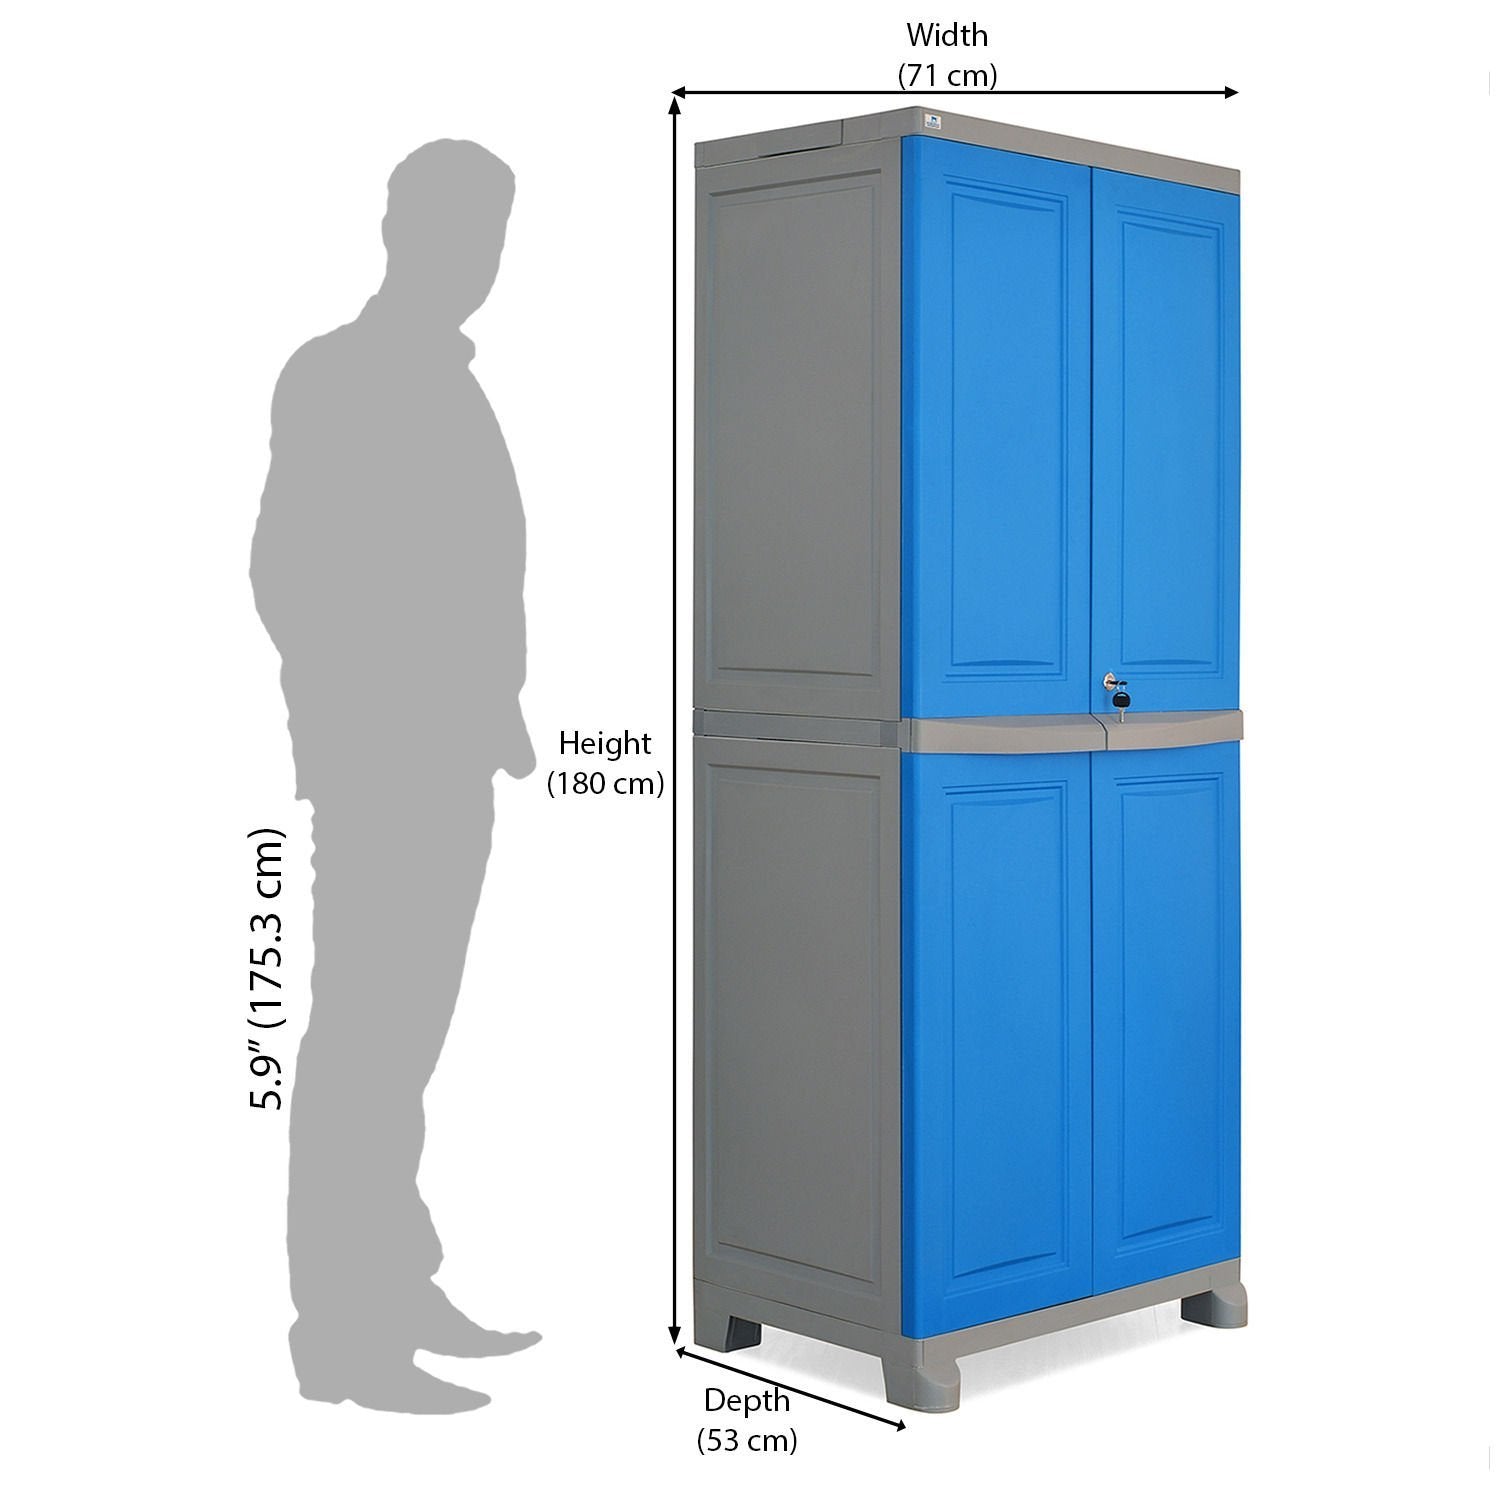 Nilkamal Freedom Big 1 (FB1) Plastic Storage Cabinet (Deep Blue and Grey)